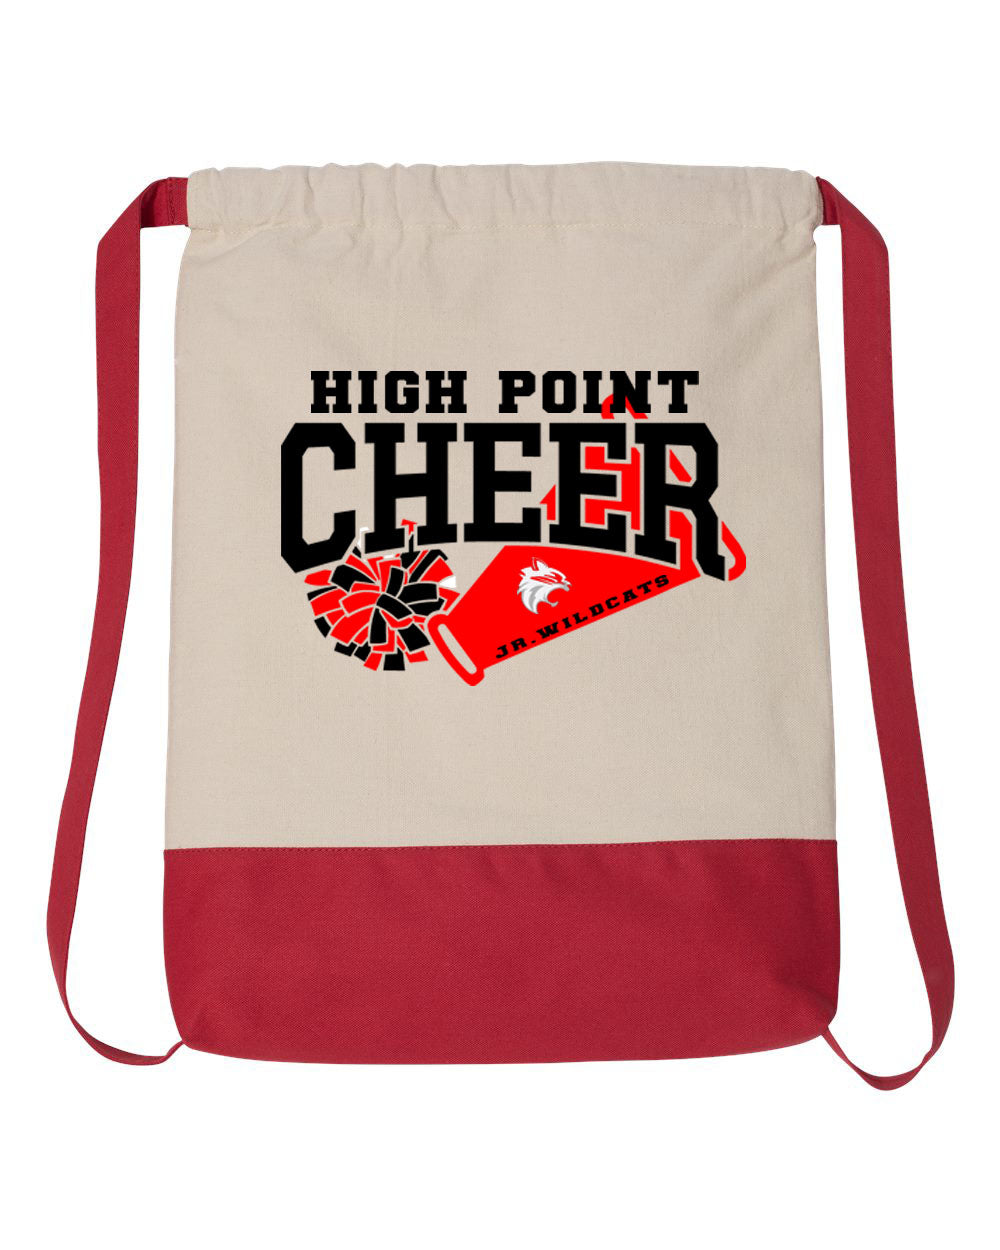 High Point Cheer Design 1 Drawstring Bag